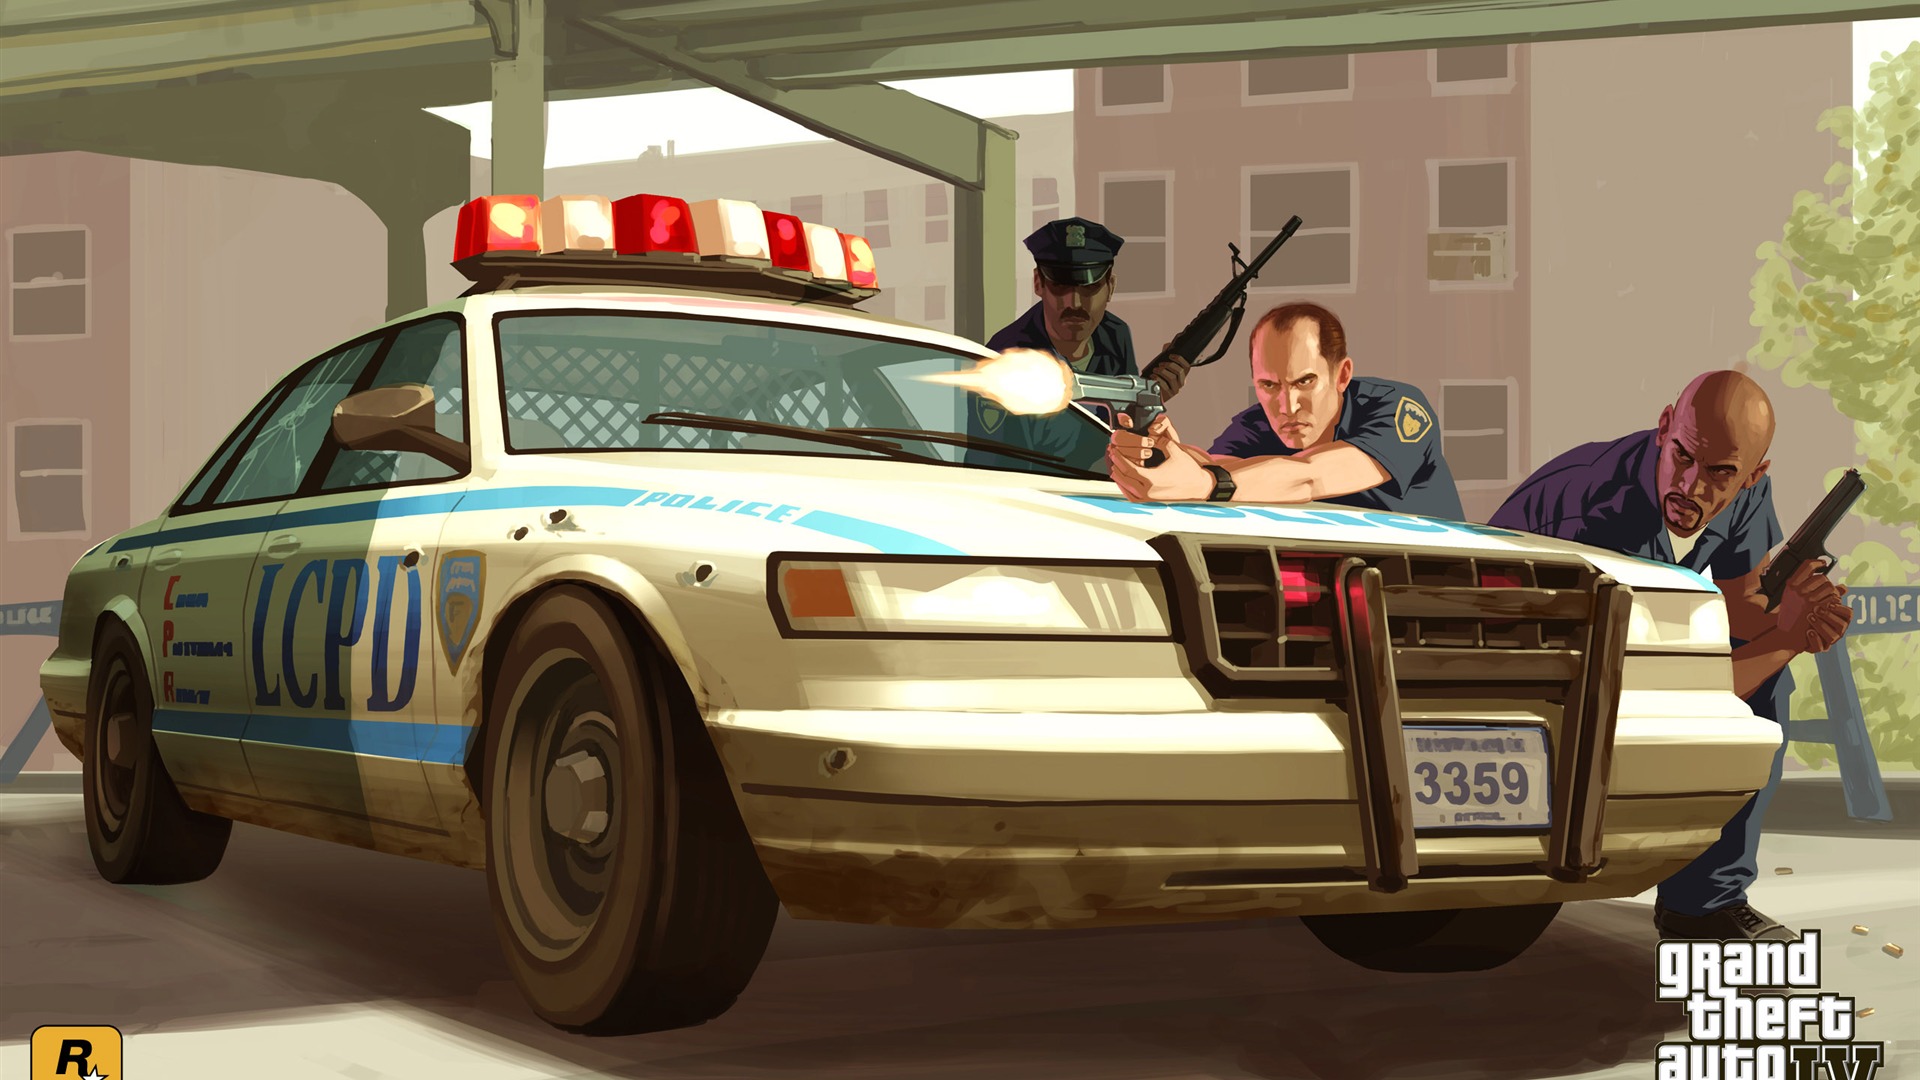 Grand Theft Auto: Vice City 侠盗猎车手: 罪恶都市4 - 1920x1080